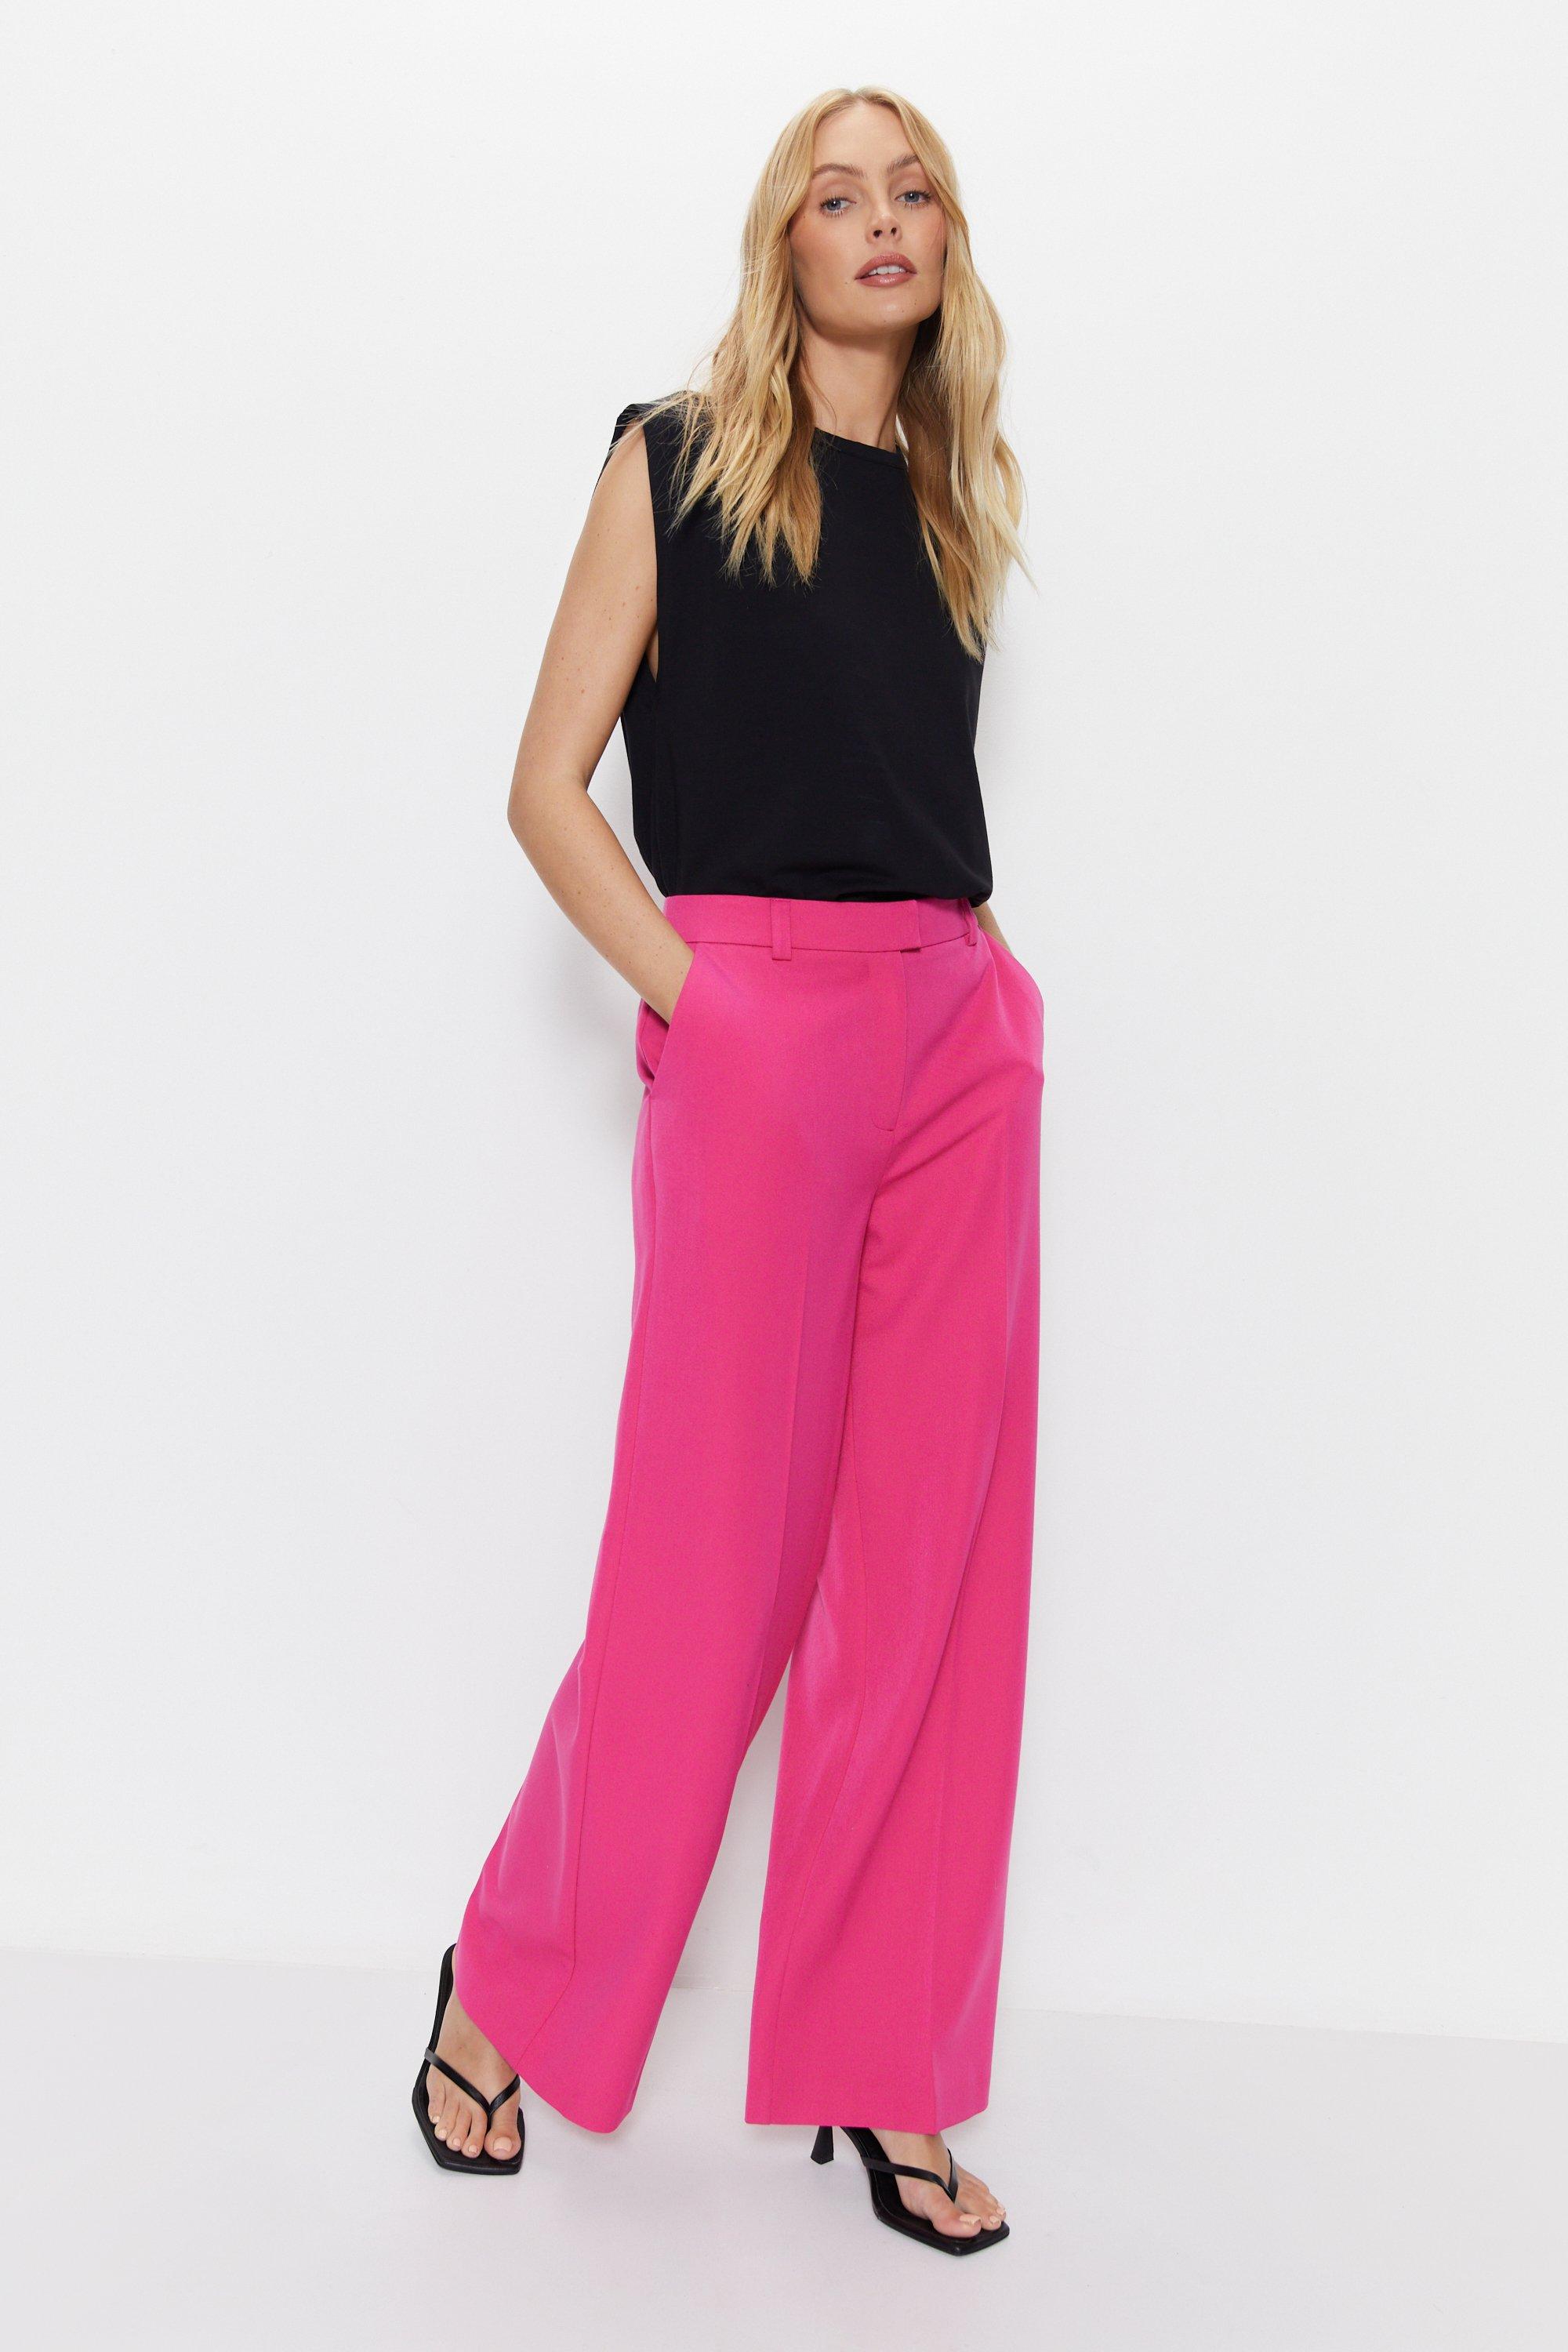 Trousers for Women | Trousers & Cargos Pants | Warehouse UK